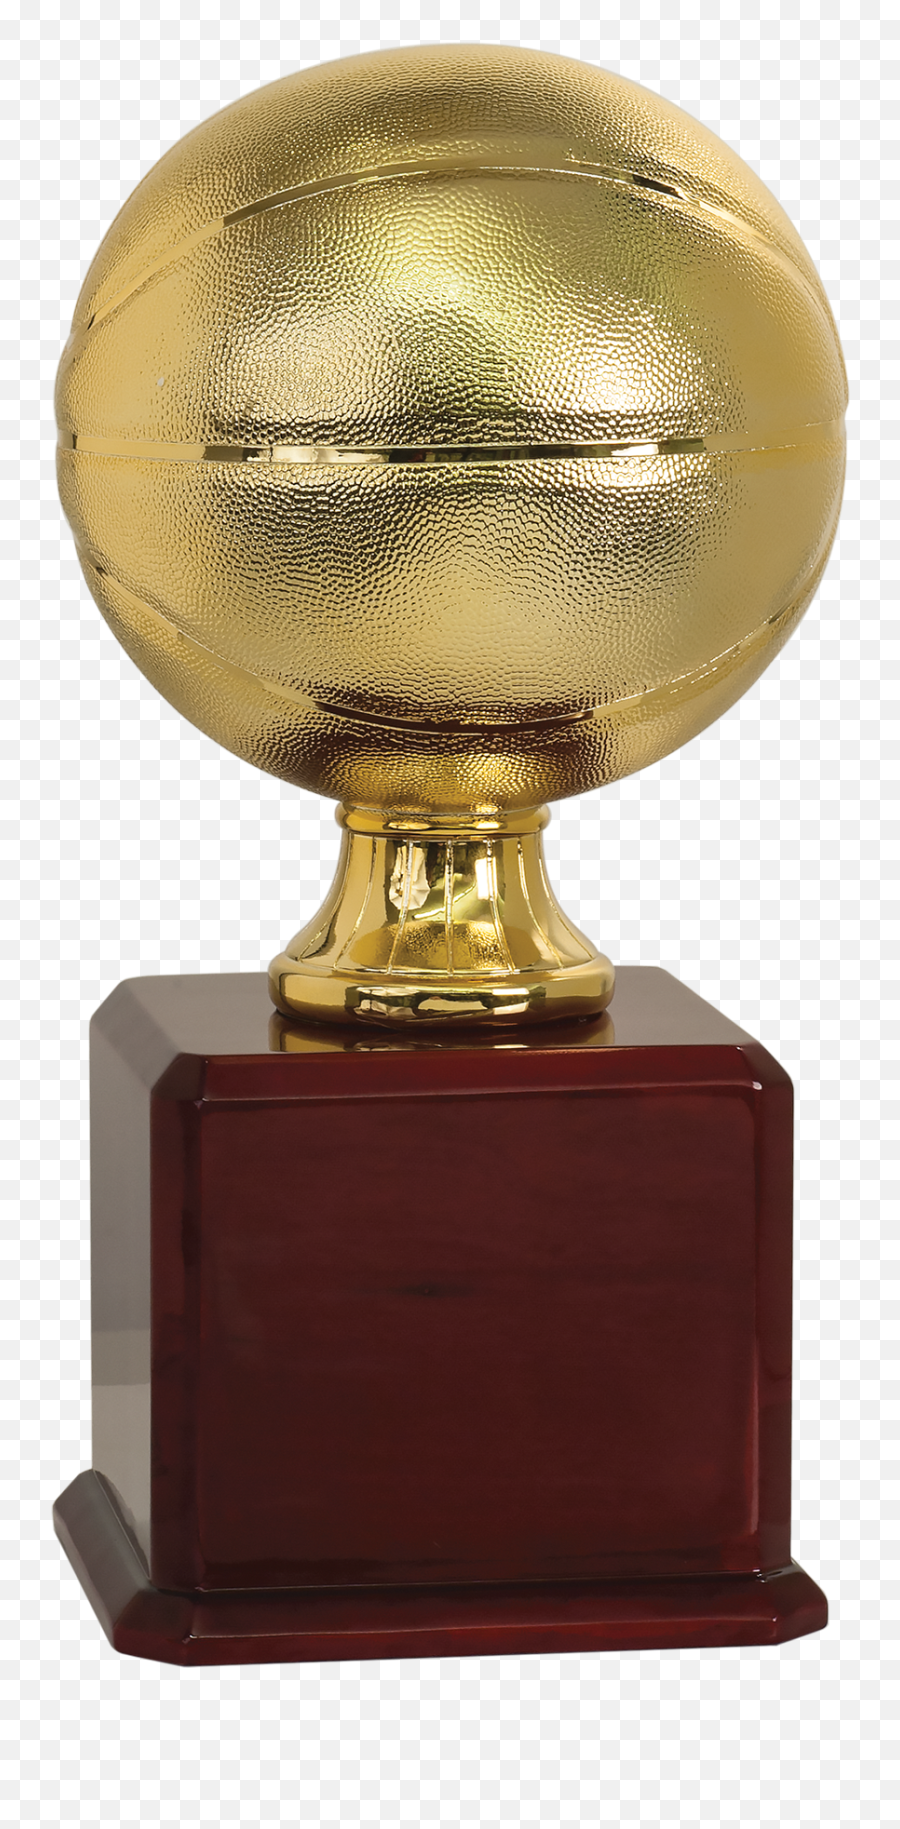 Basketball Trophy Png Transparent - Awards Company Trophy,Nba Trophy Png